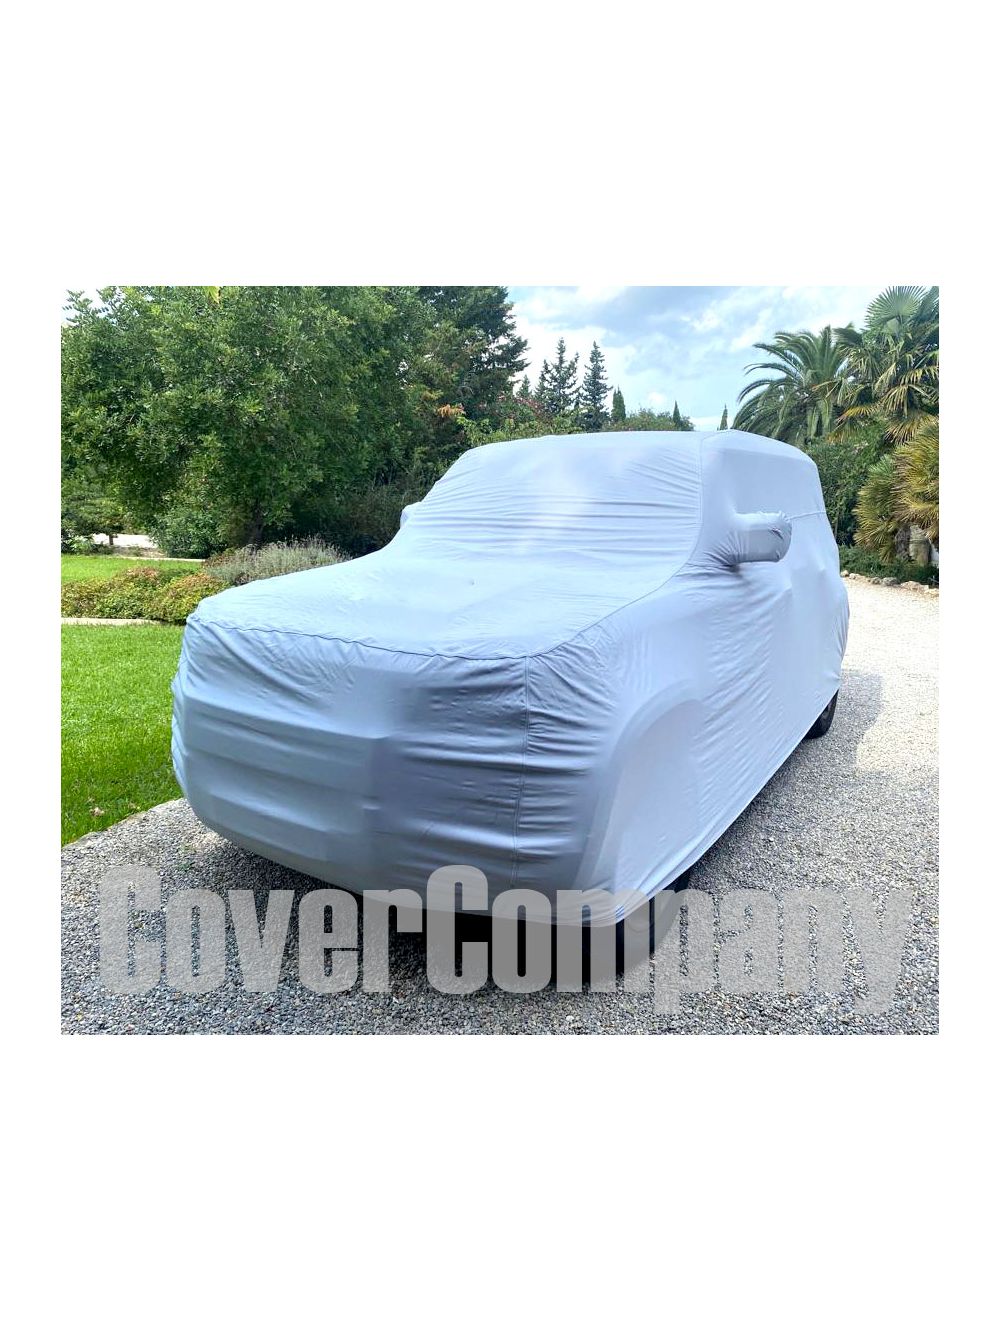 Waterproof Outdoor Half Car Cover in Outdoor car covers